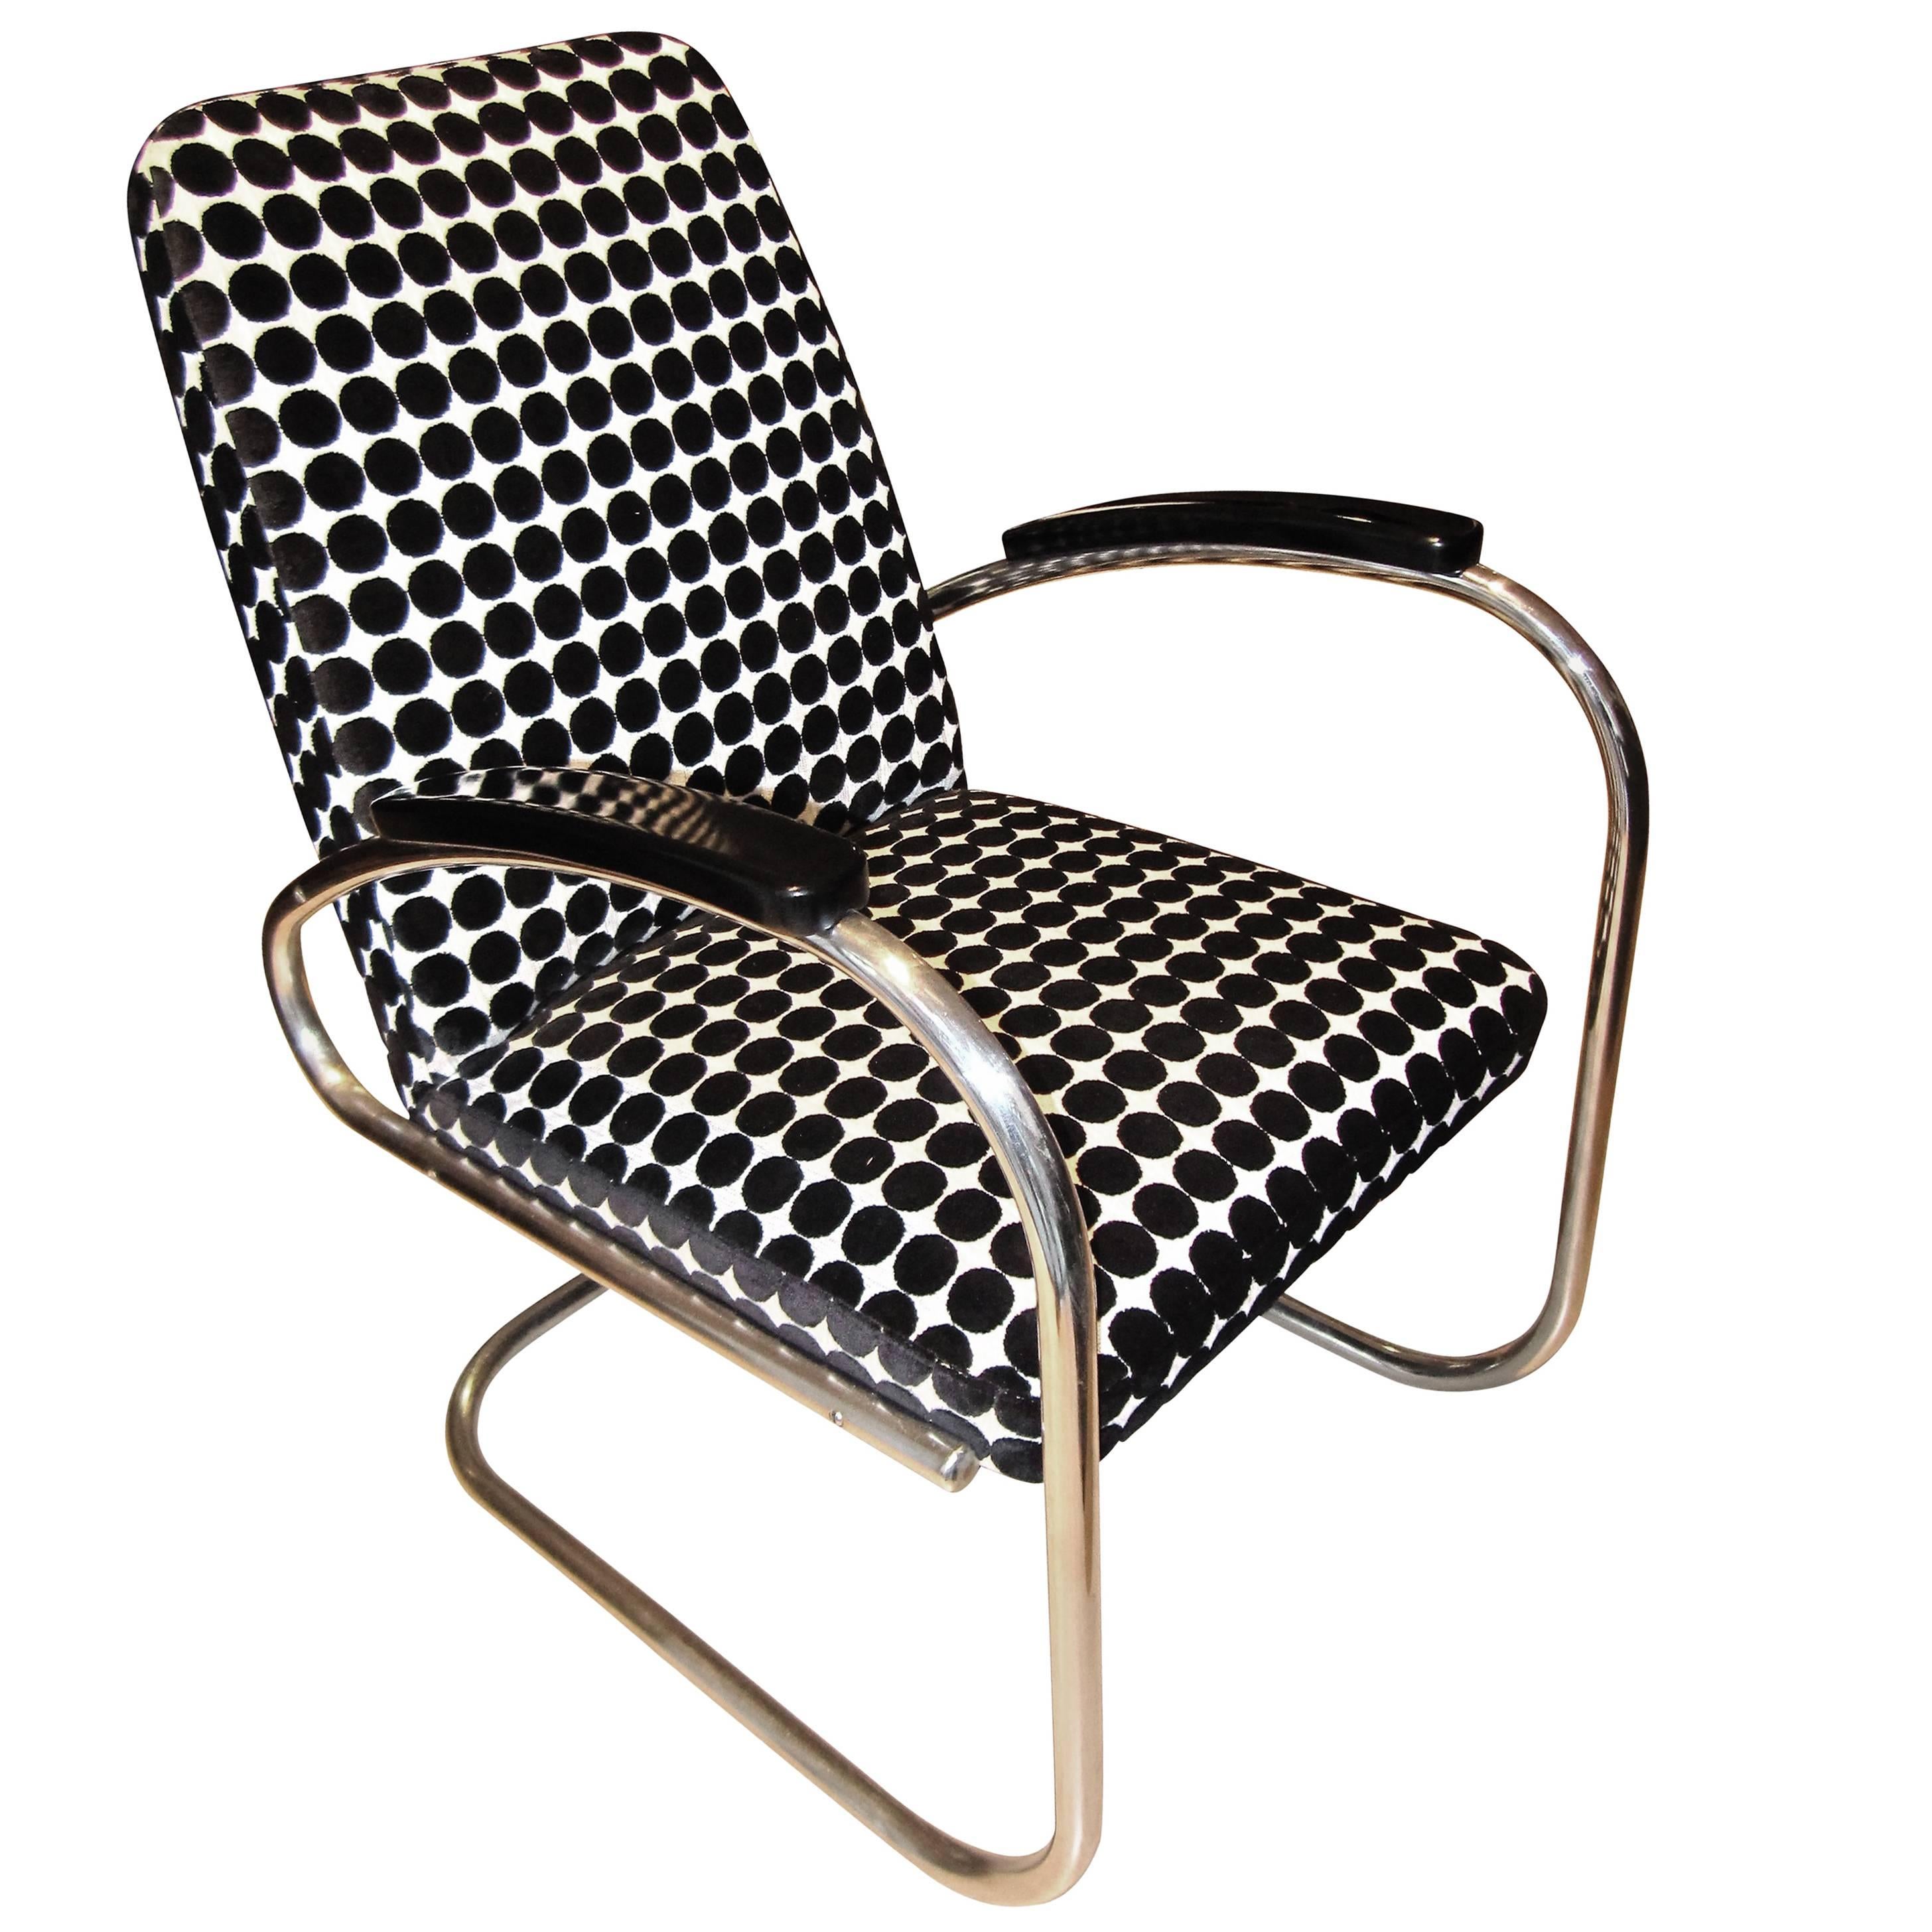 Bauhaus Tubular Steel Chair, 'FUN' Fabric, Germany circa 1925